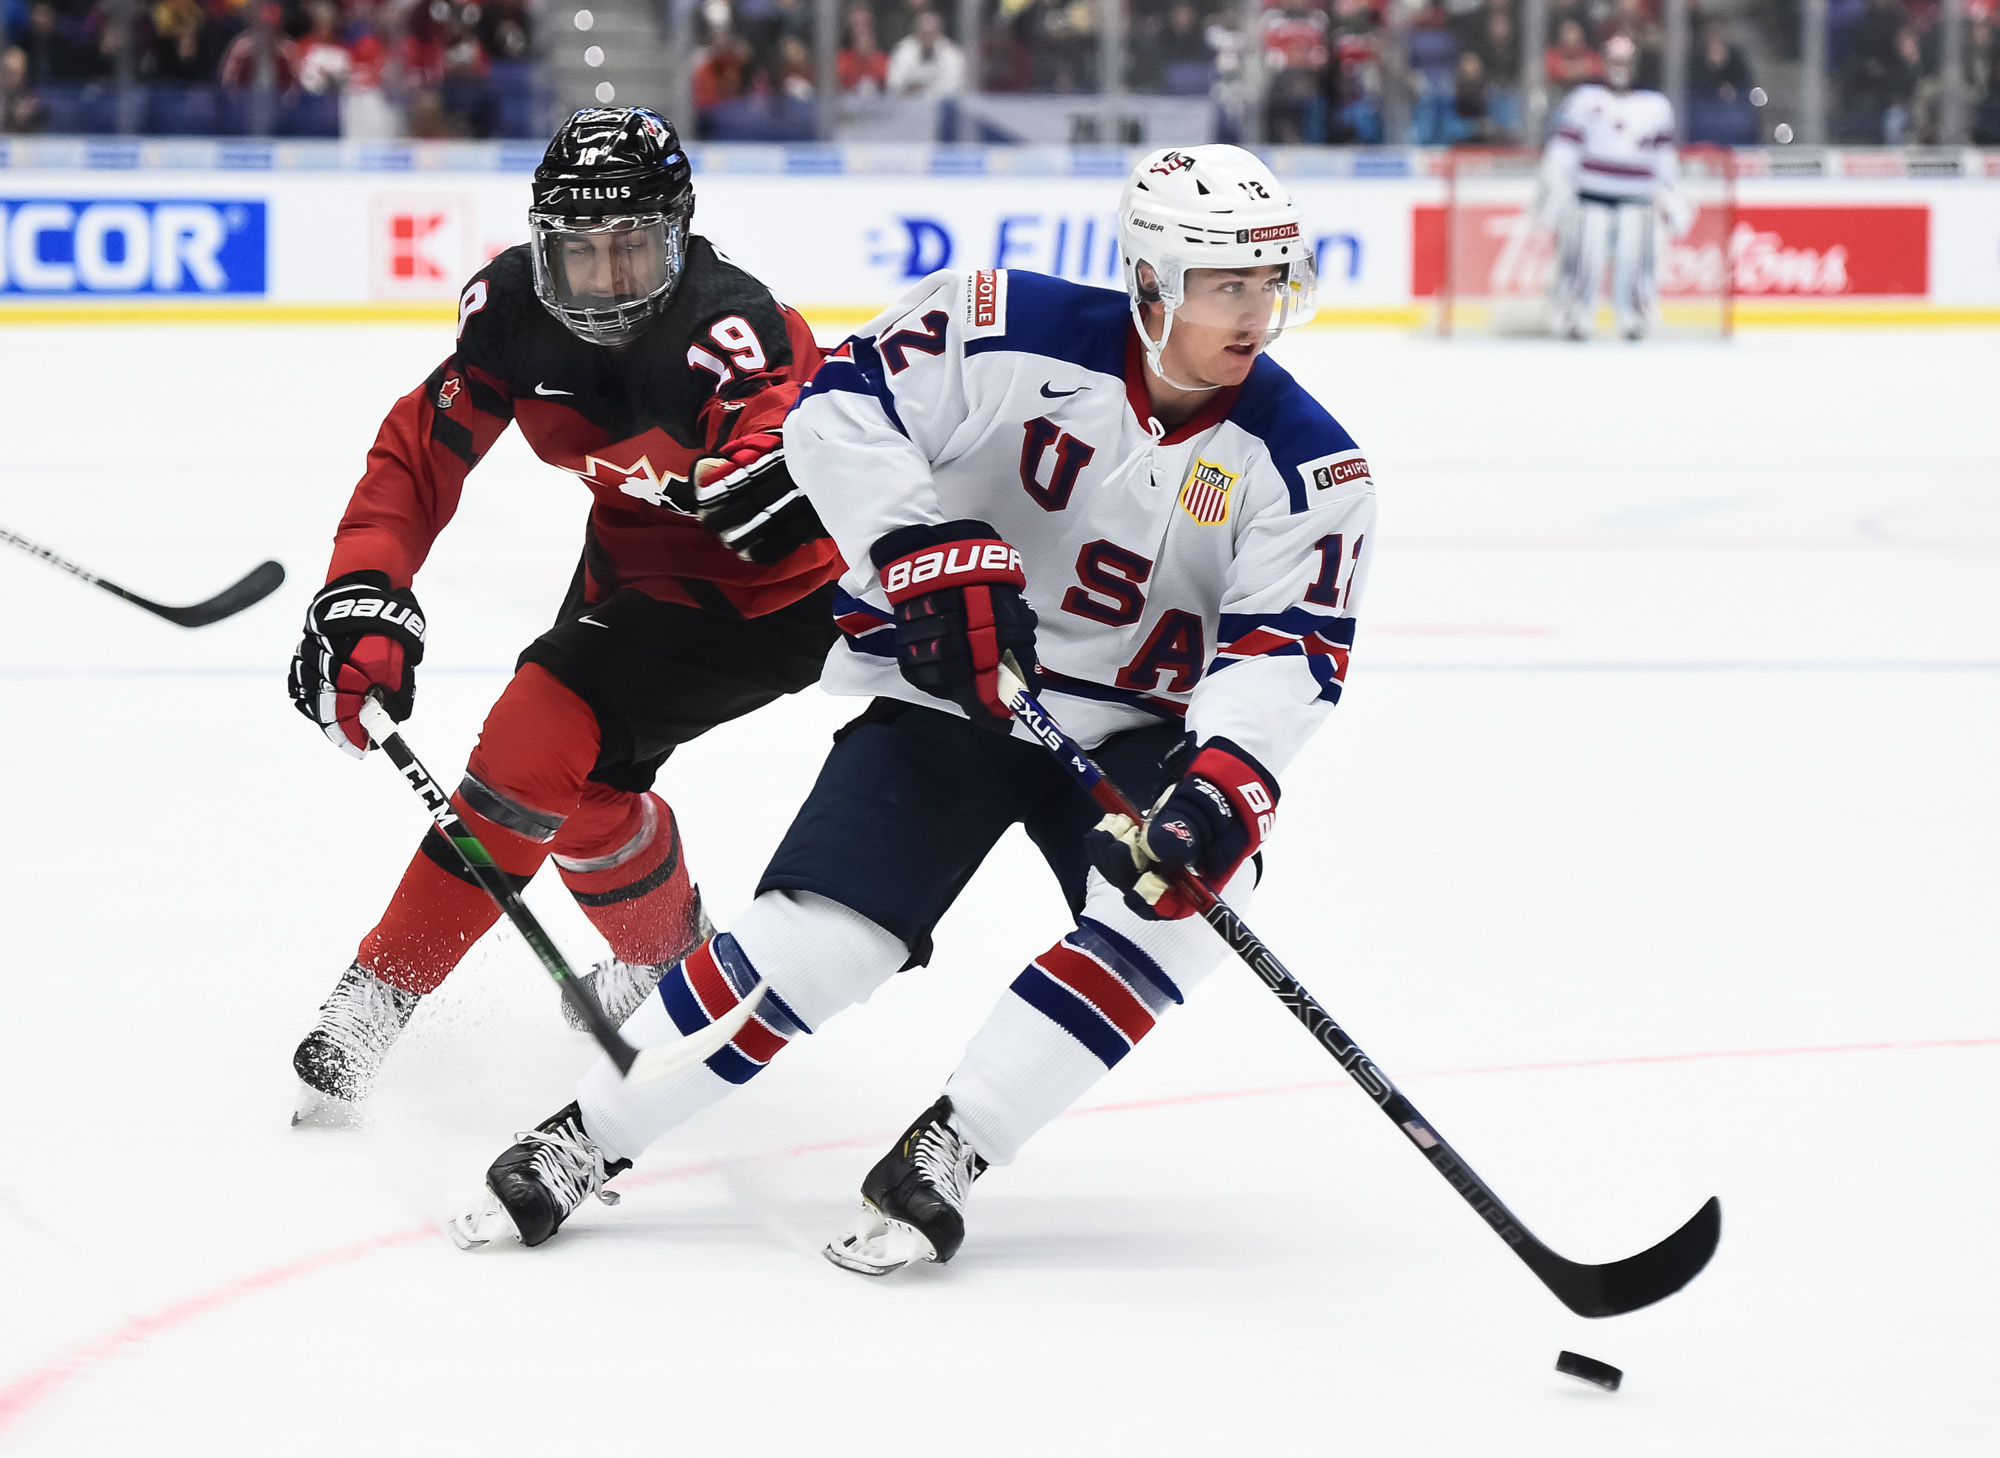 IIHF - Gallery: Canada vs. USA - 2020 IIHF World Junior Championship